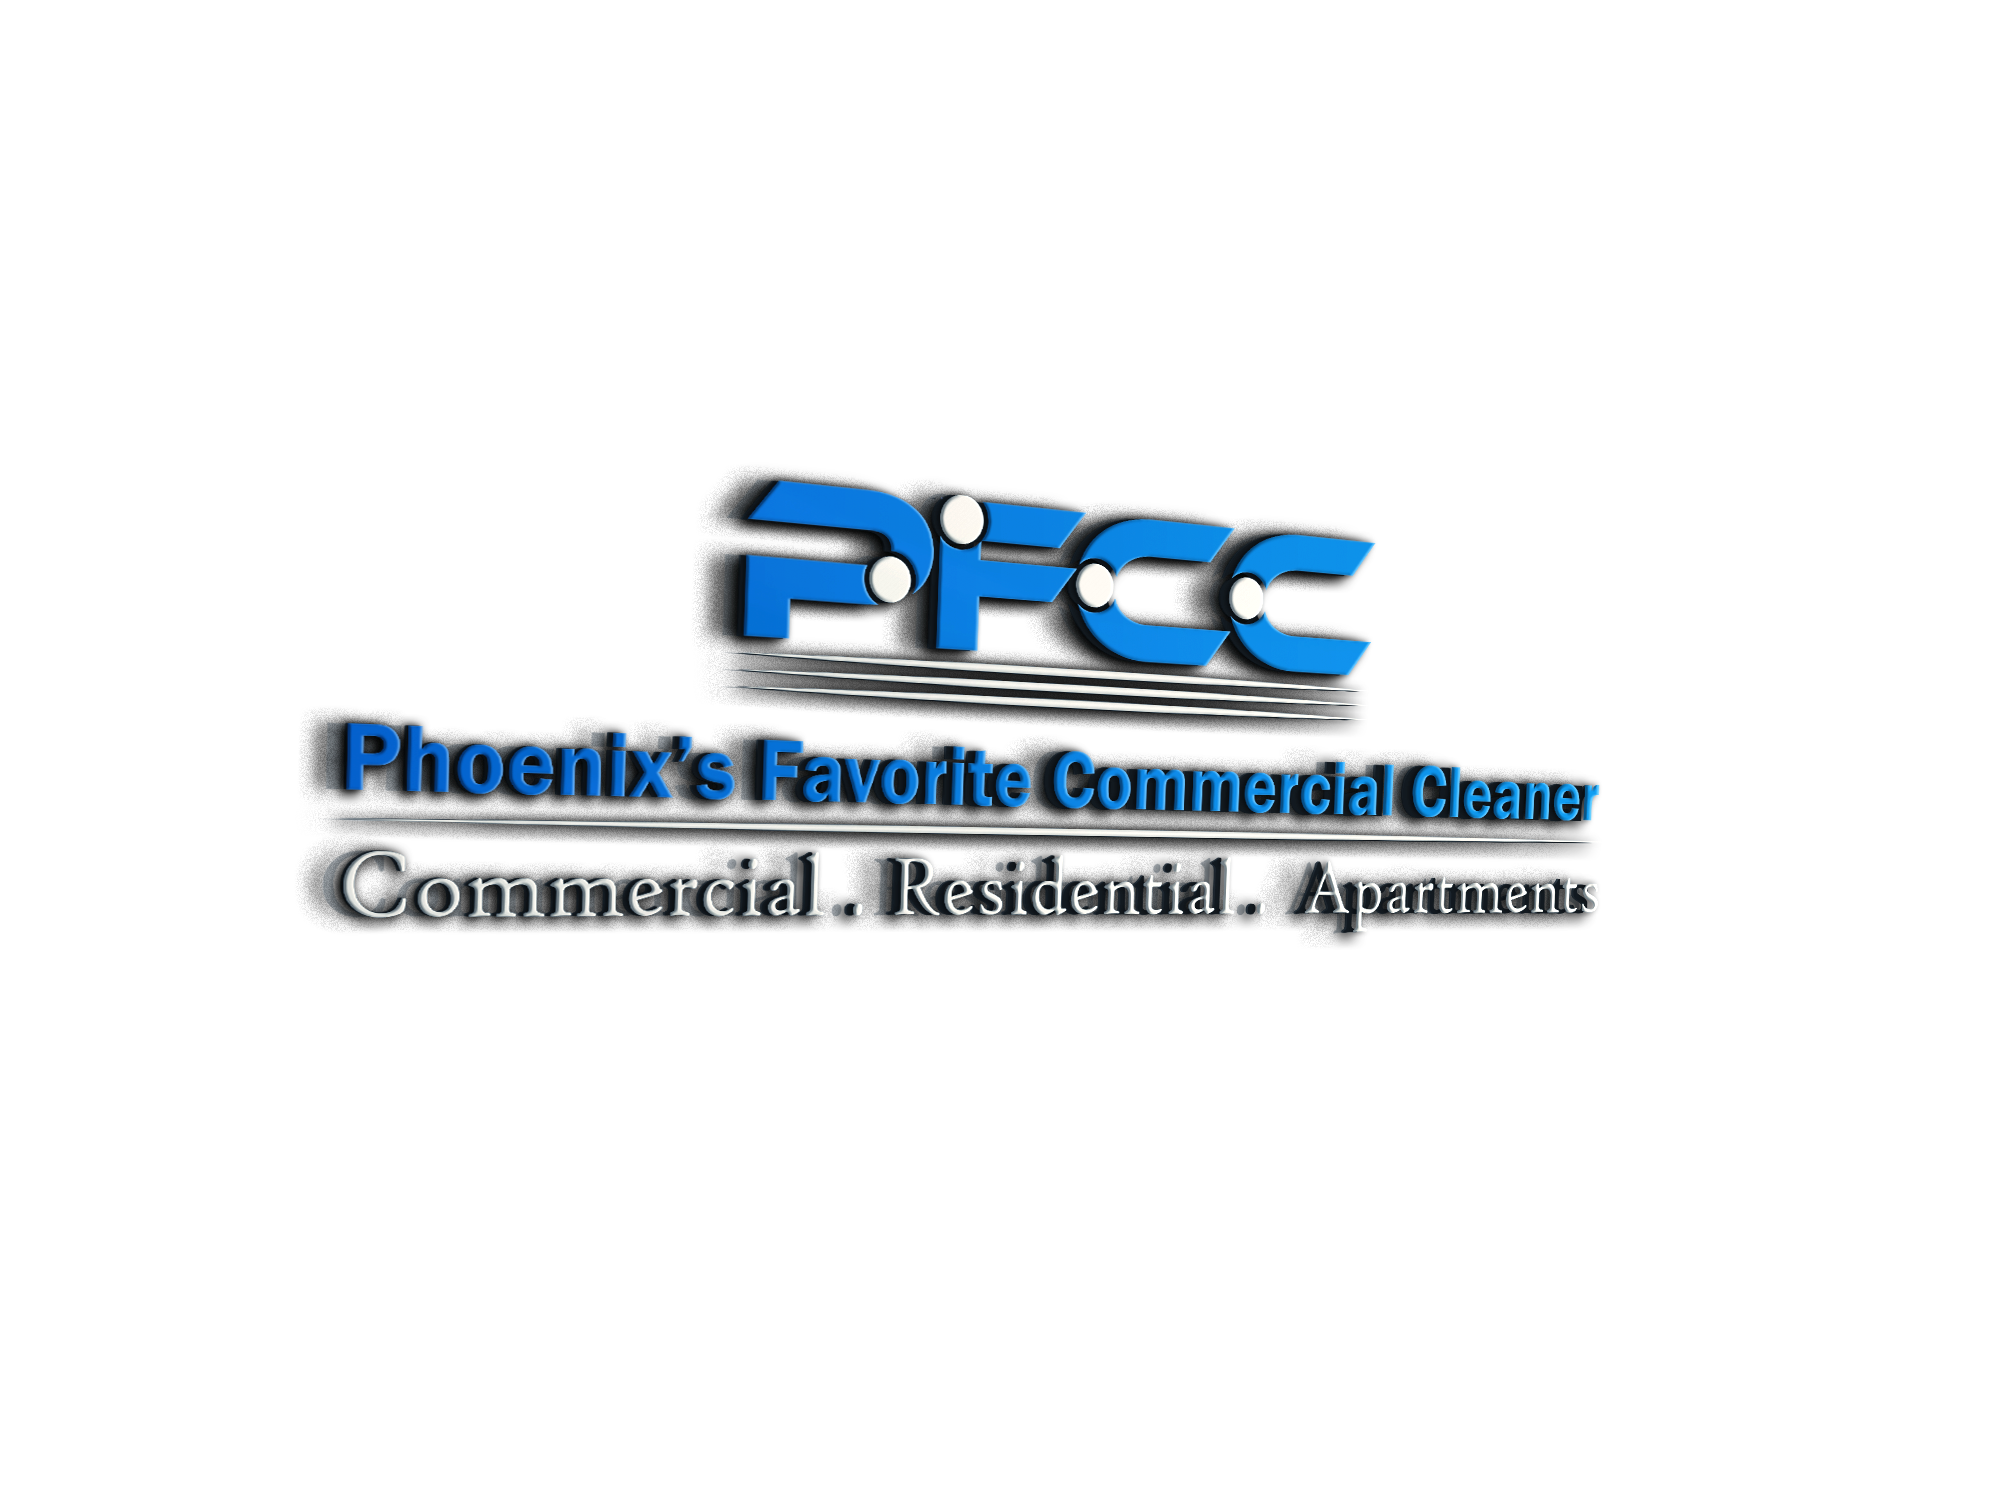 Phoenix’s Favorite Commercial Cleaner